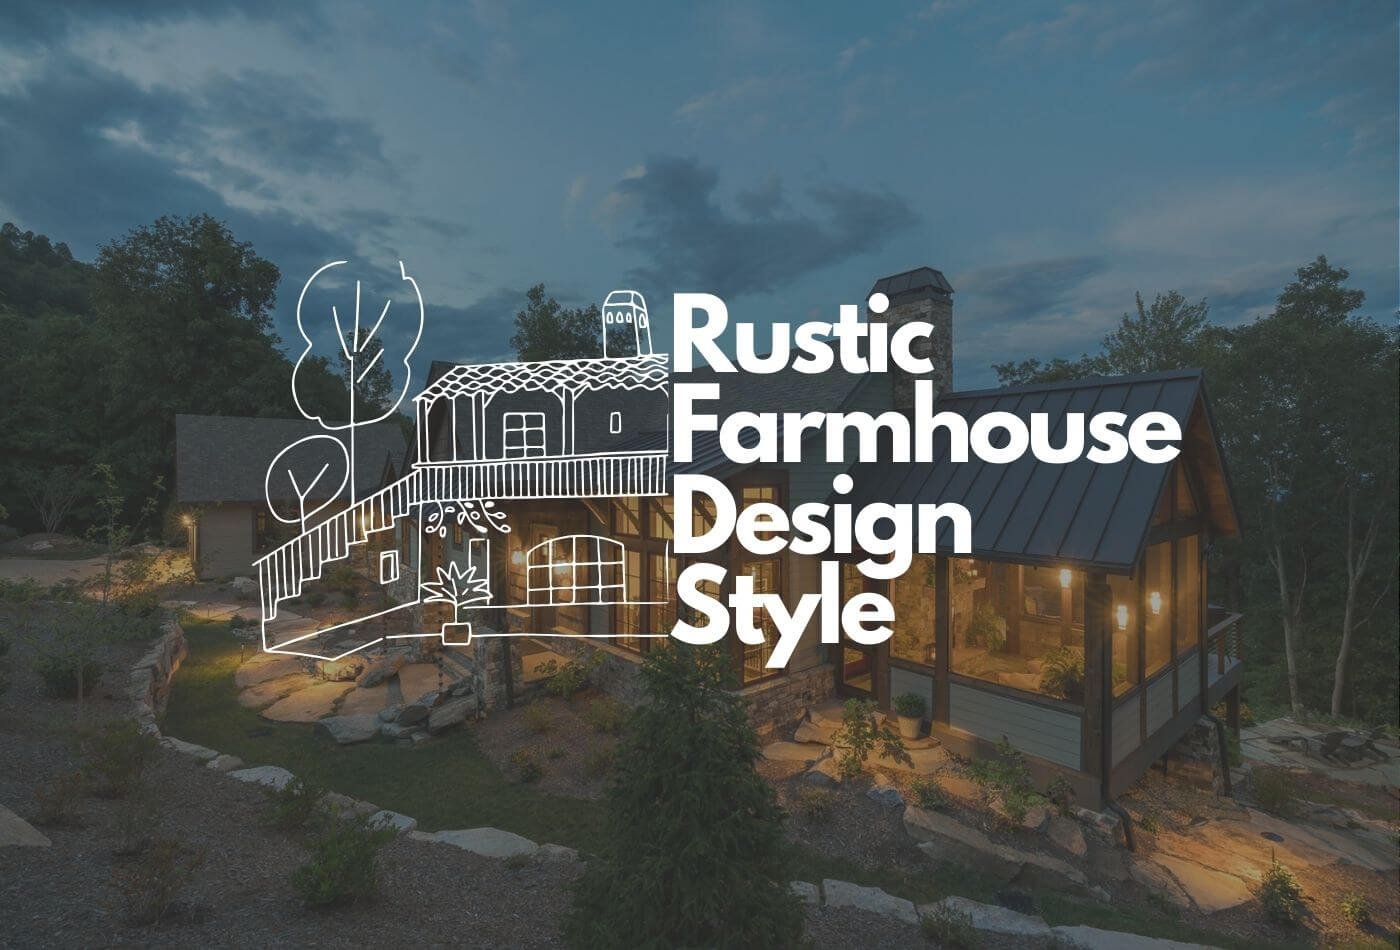 Rustic Farmhouse Design Style: Bring Back Vintage!